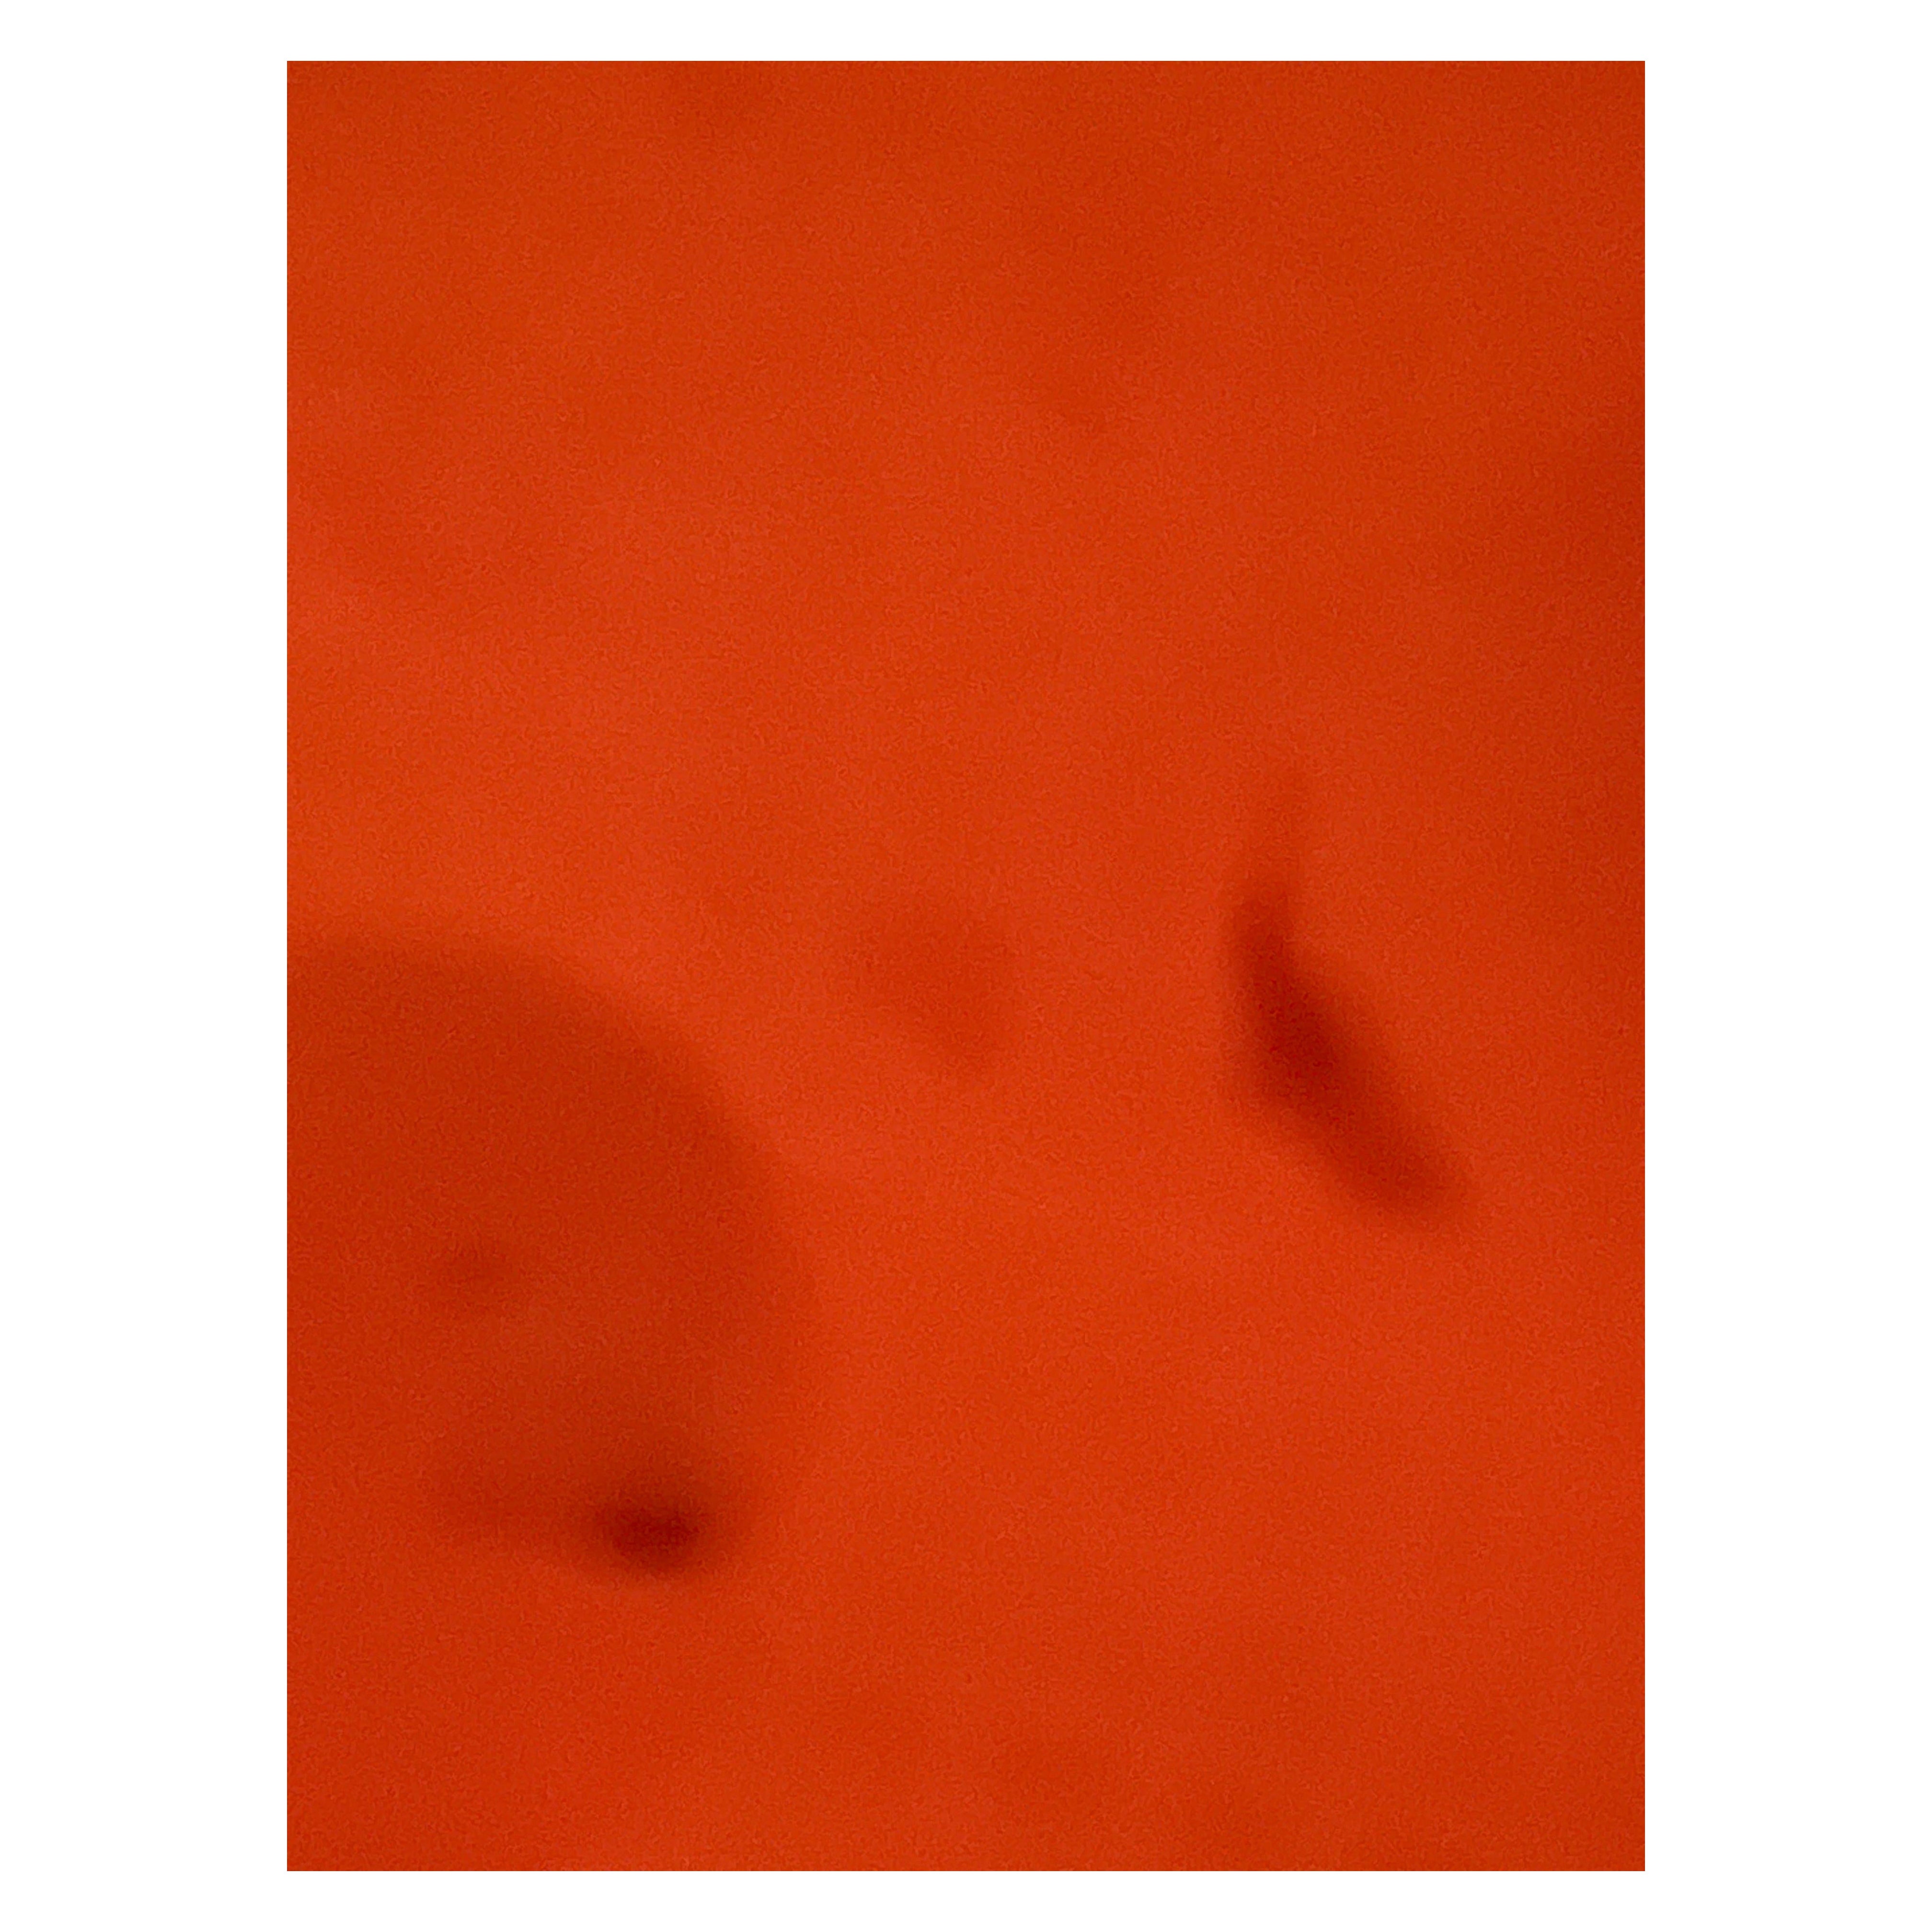 Stefanie Schneider Abstract Photograph - Life on Mars (My Desert Living Project) - Hatching